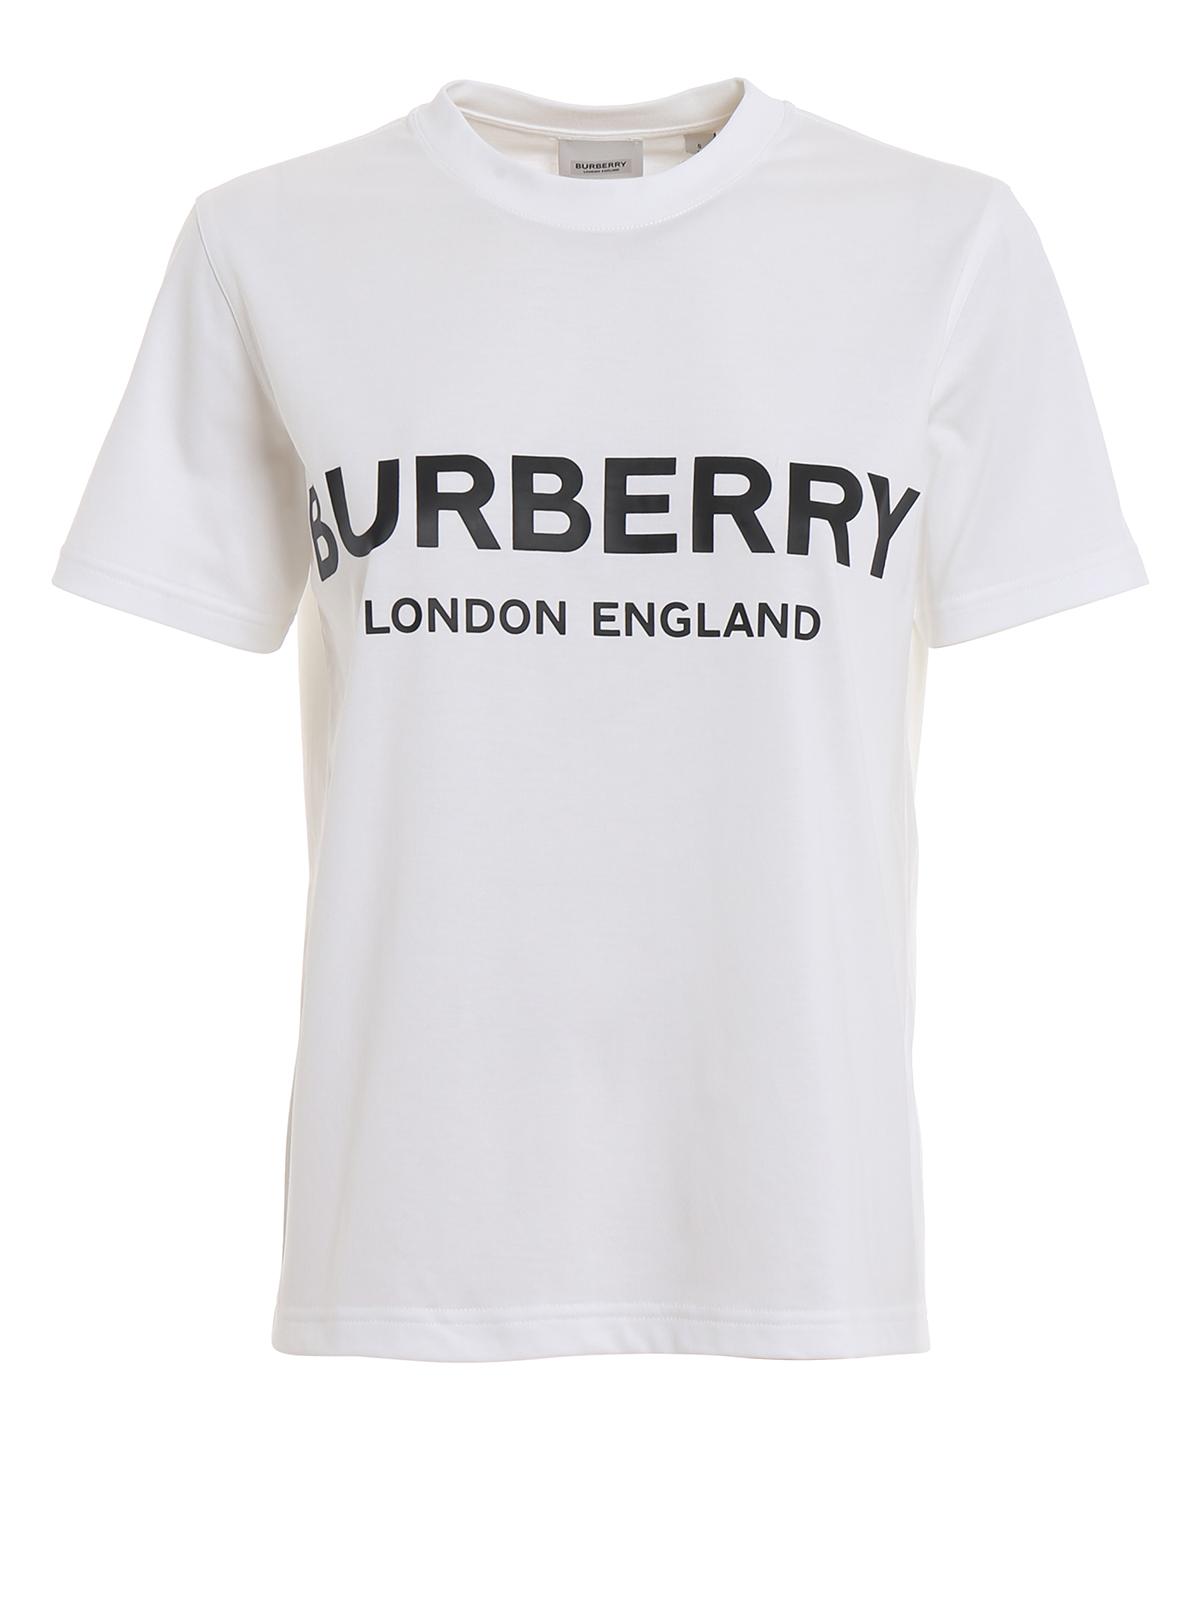 T-shirts Burberry - Shotover T-shirt - 8008894 | Shop online at iKRIX